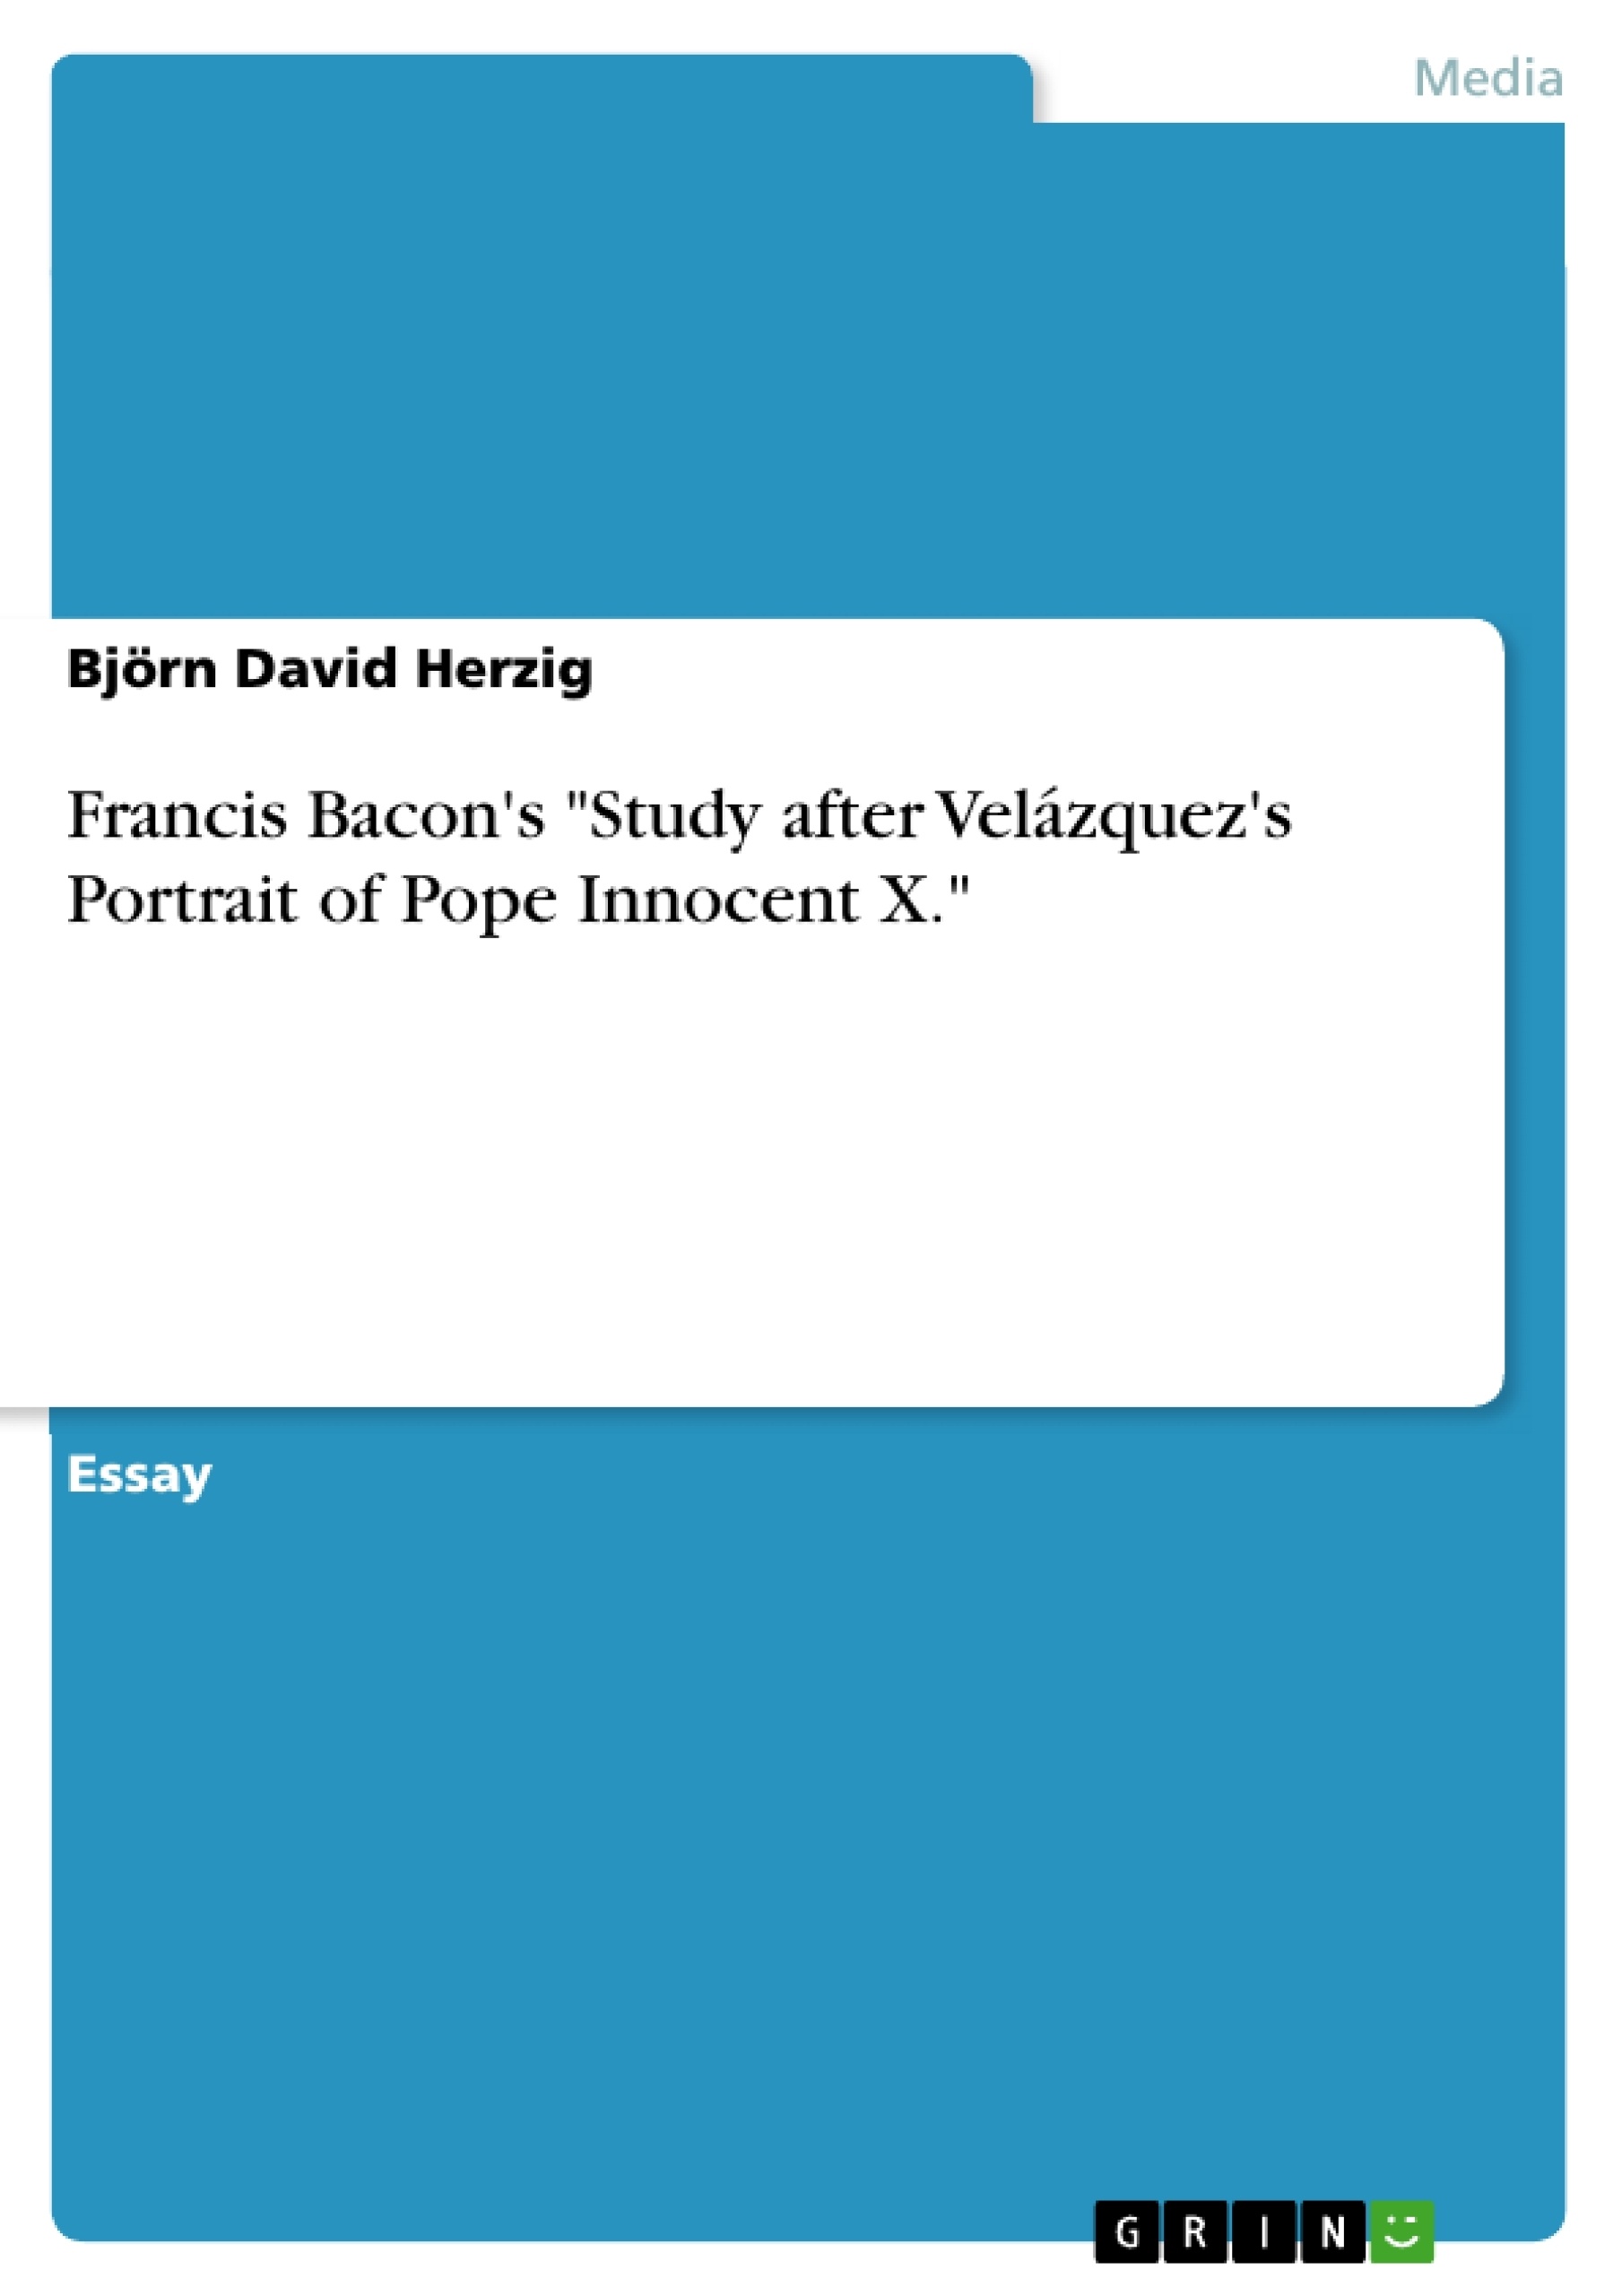 Título: Francis Bacon's "Study after Velázquez's Portrait of Pope Innocent X."